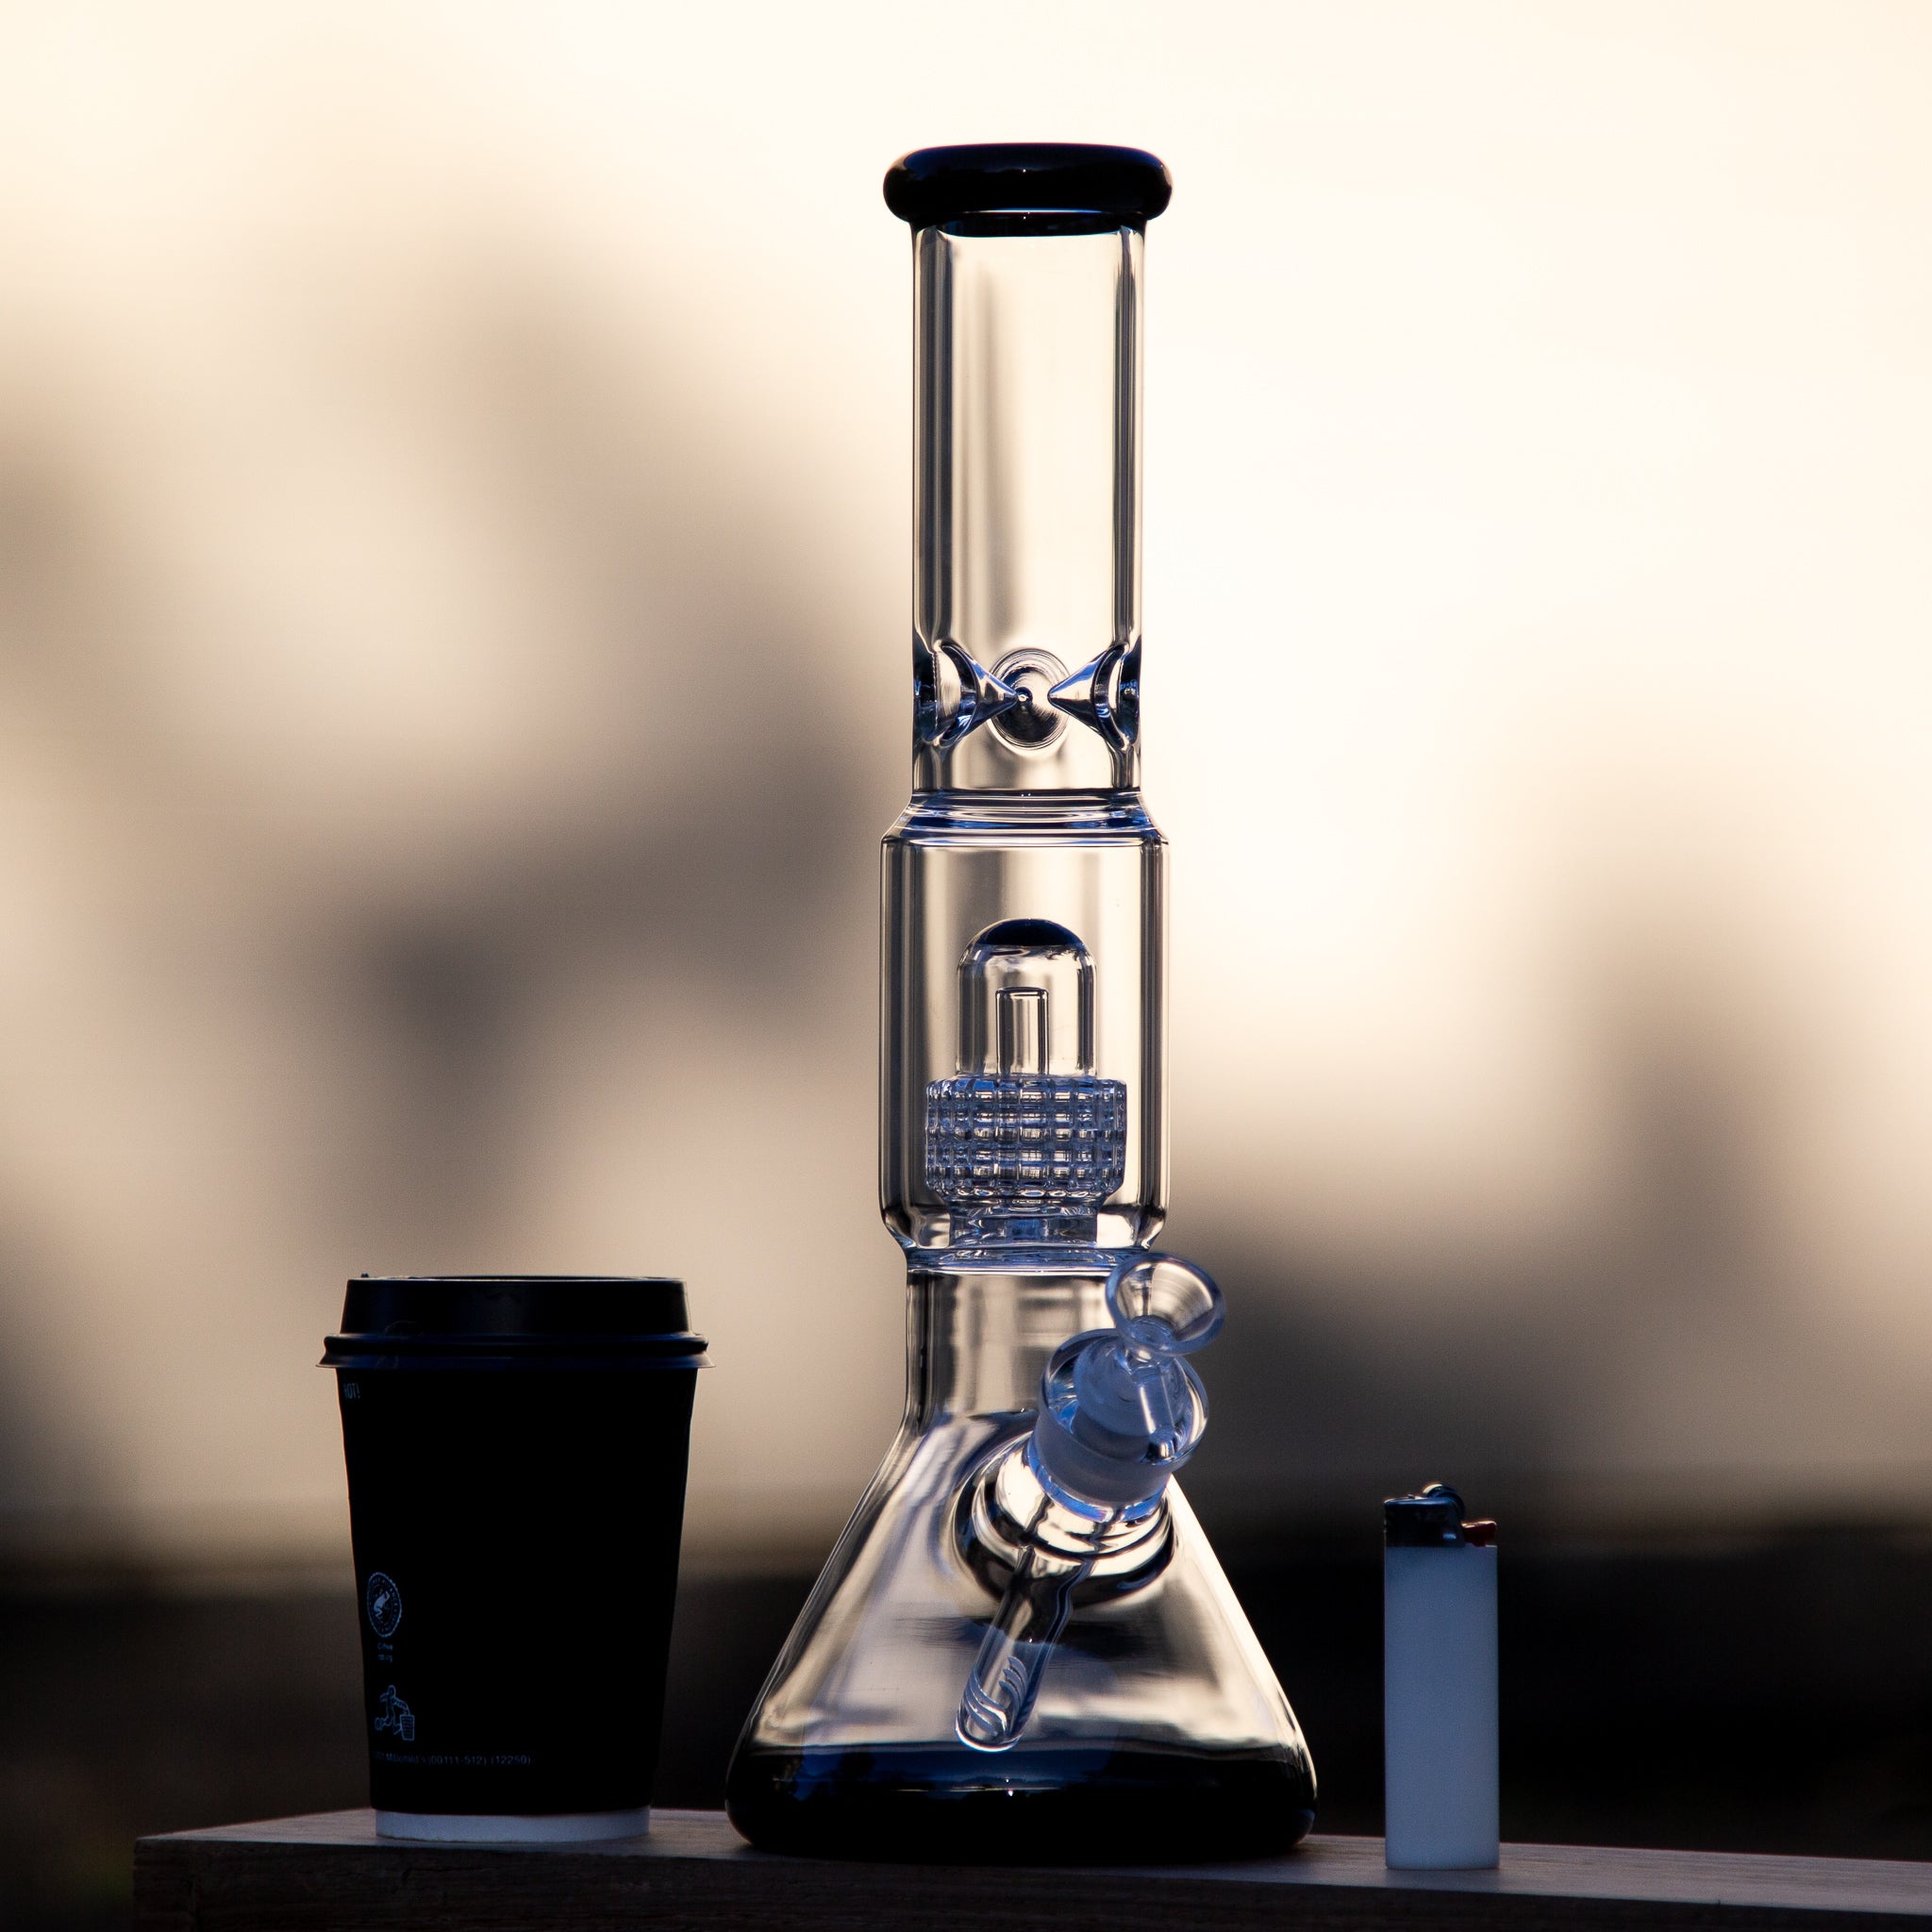 Beaker bong for smoking medical cannabis in Australia.